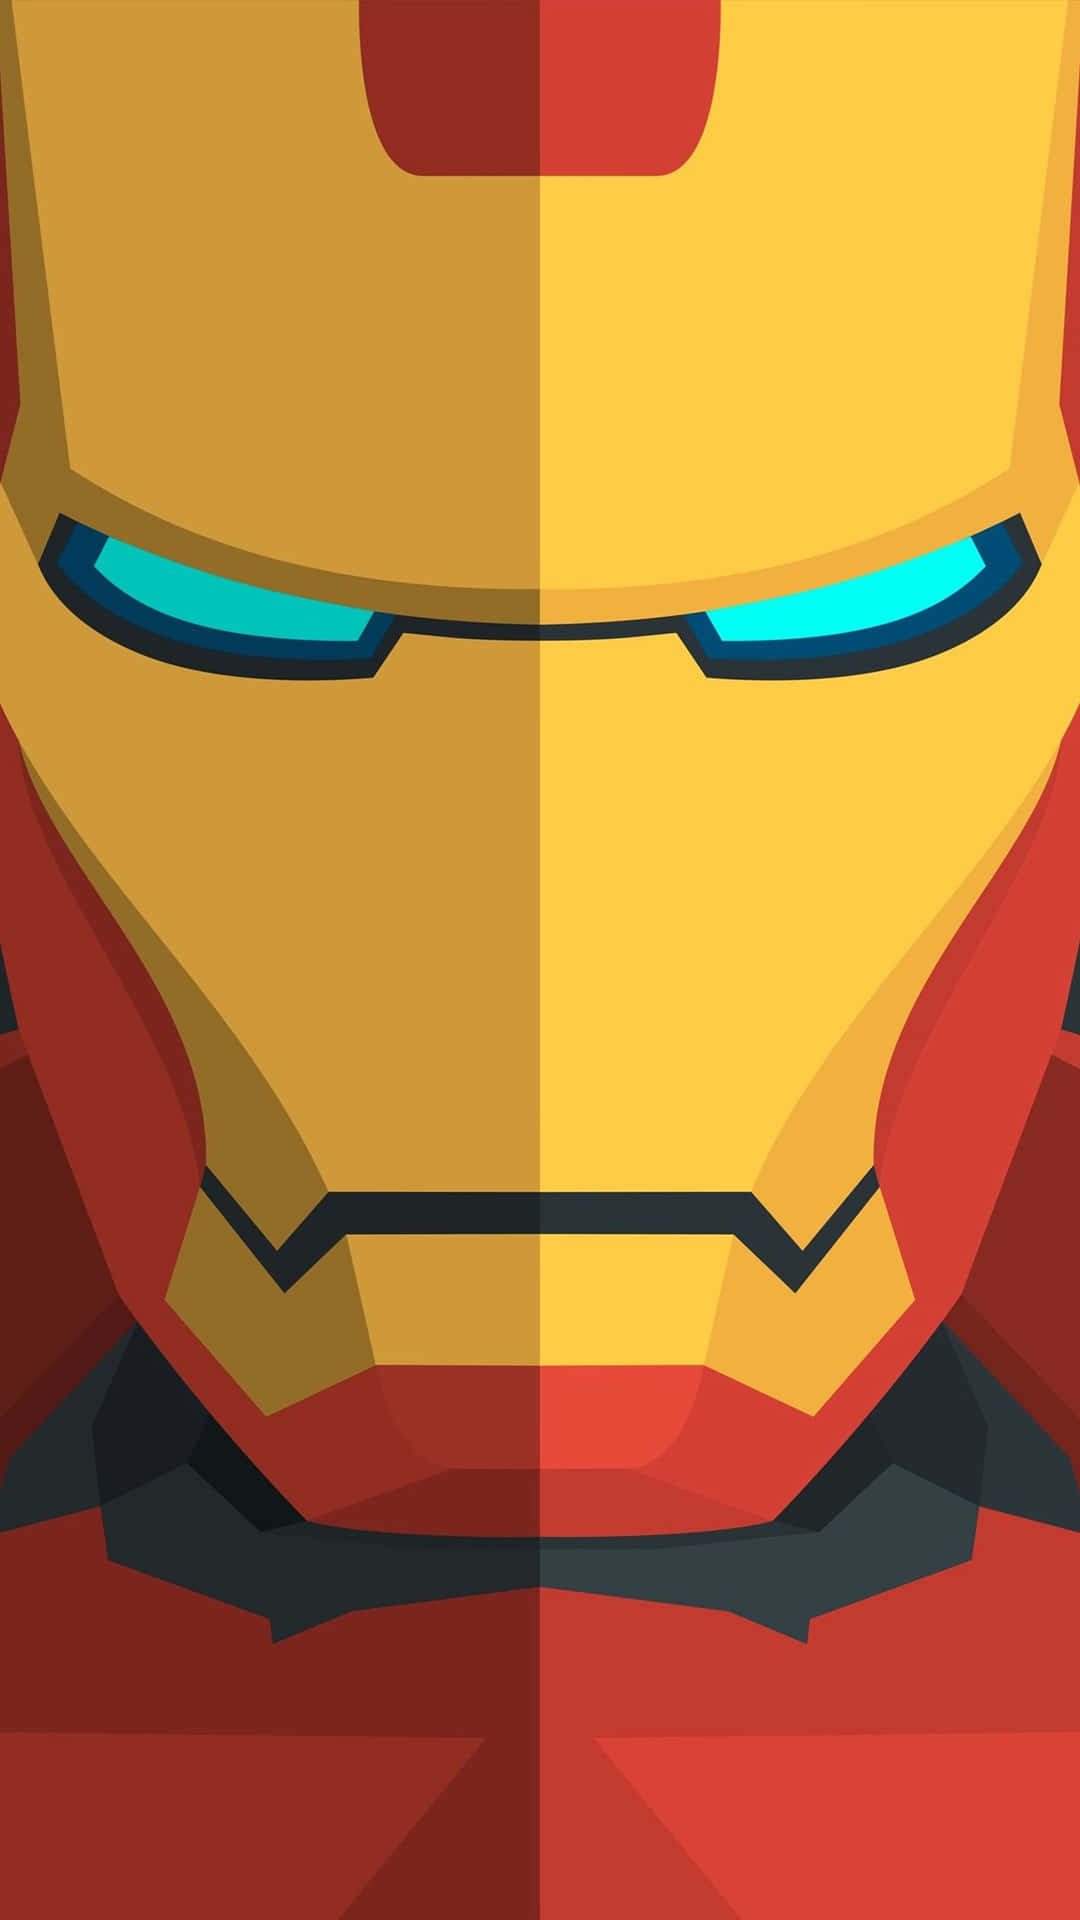 Free Iron Man 4k Mobile Wallpaper Downloads, [100+] Iron Man 4k Mobile  Wallpapers for FREE 